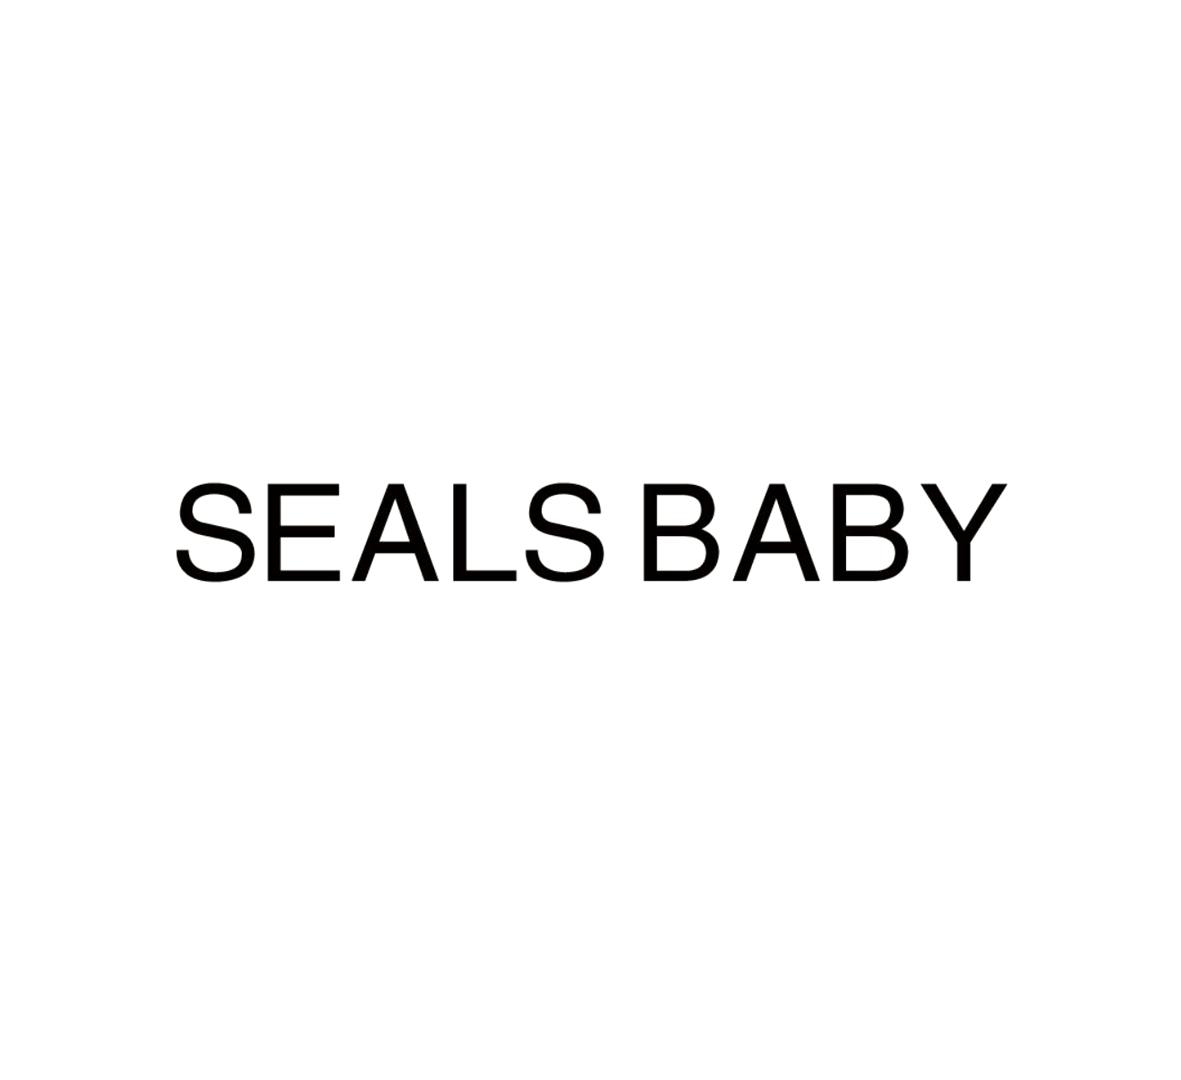 SEALS BABY商标转让